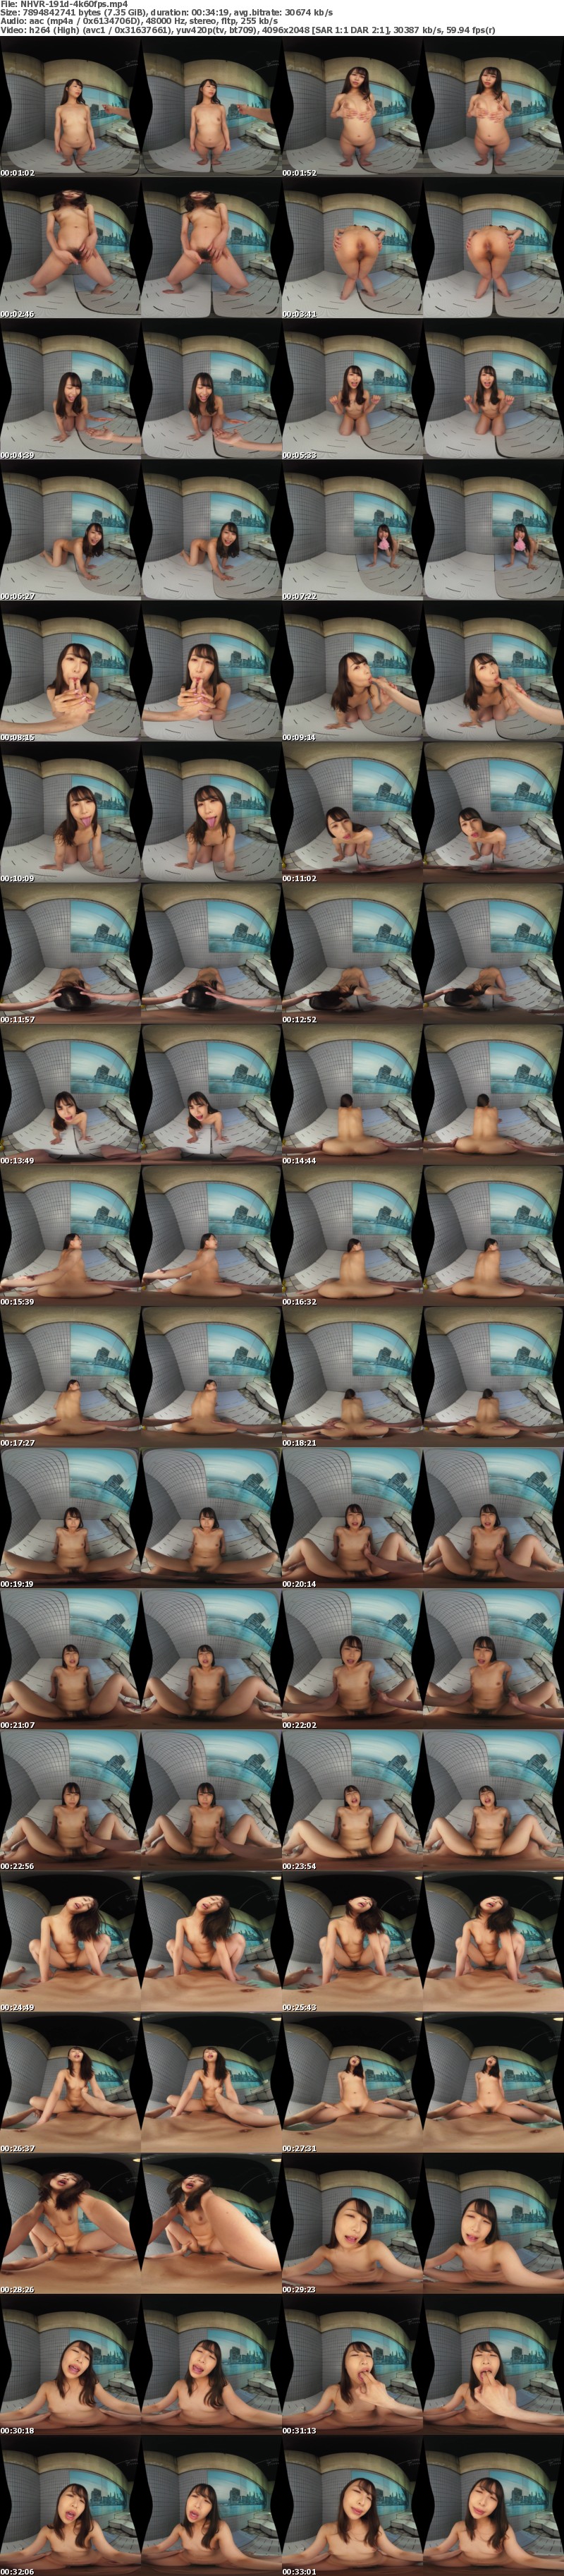 (VR) NHVR-191 【VR】催●銭湯 女湯に忍び込み片っ端からマインドコントロール中出し洗脳 完全肉便器ハーレム